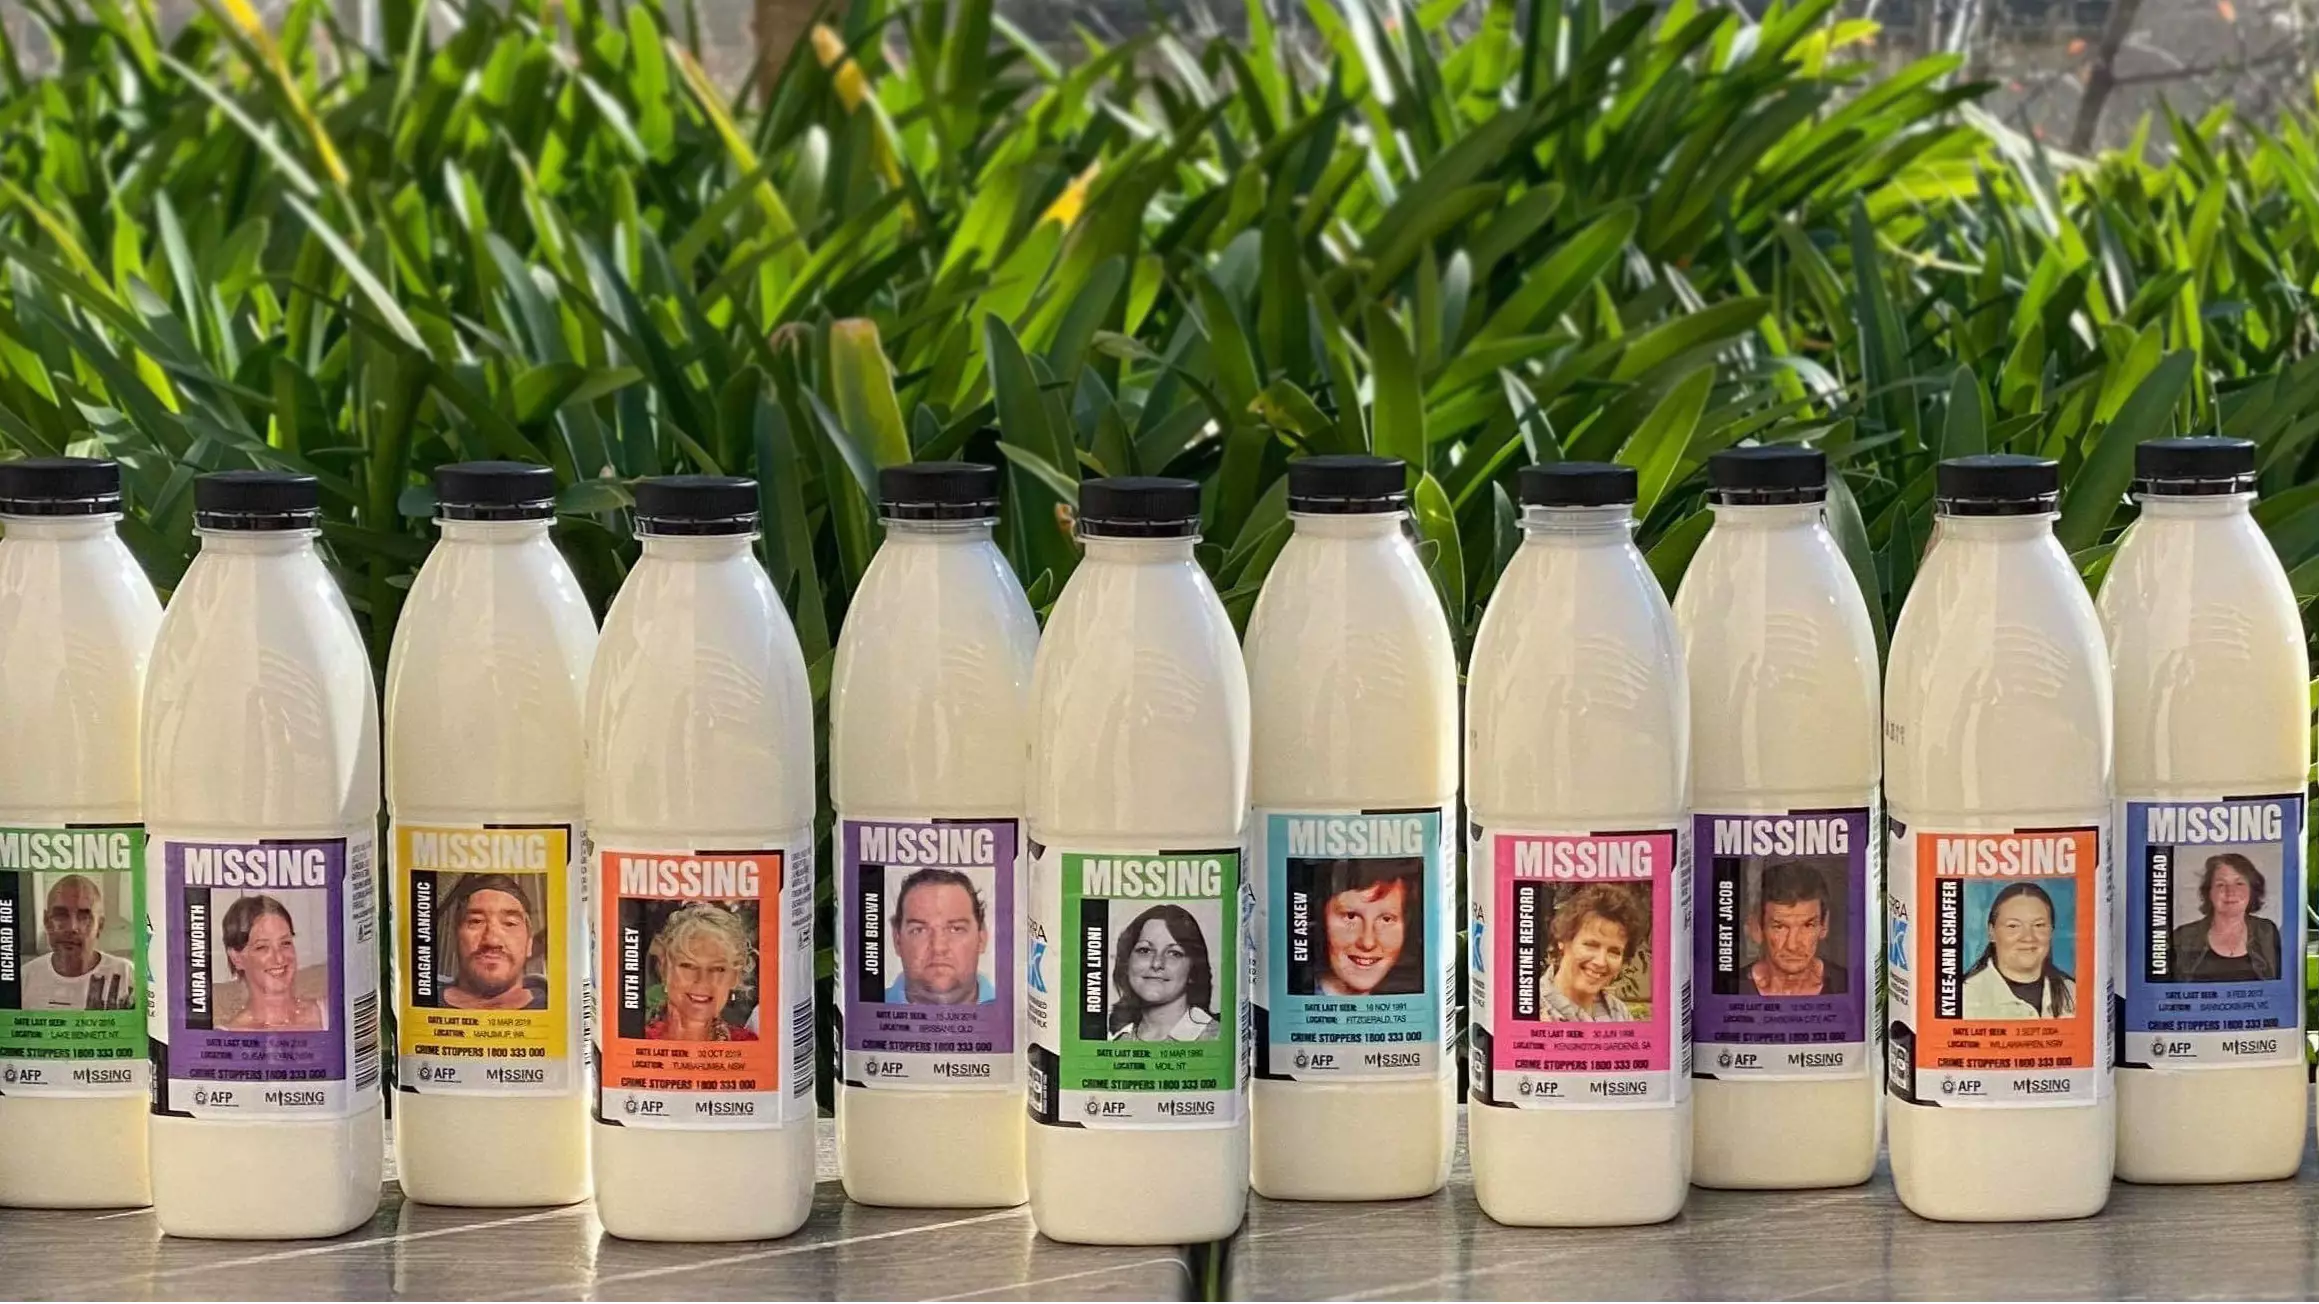 Photos Of Missing Australians Will Soon Be Printed On Milk Bottles